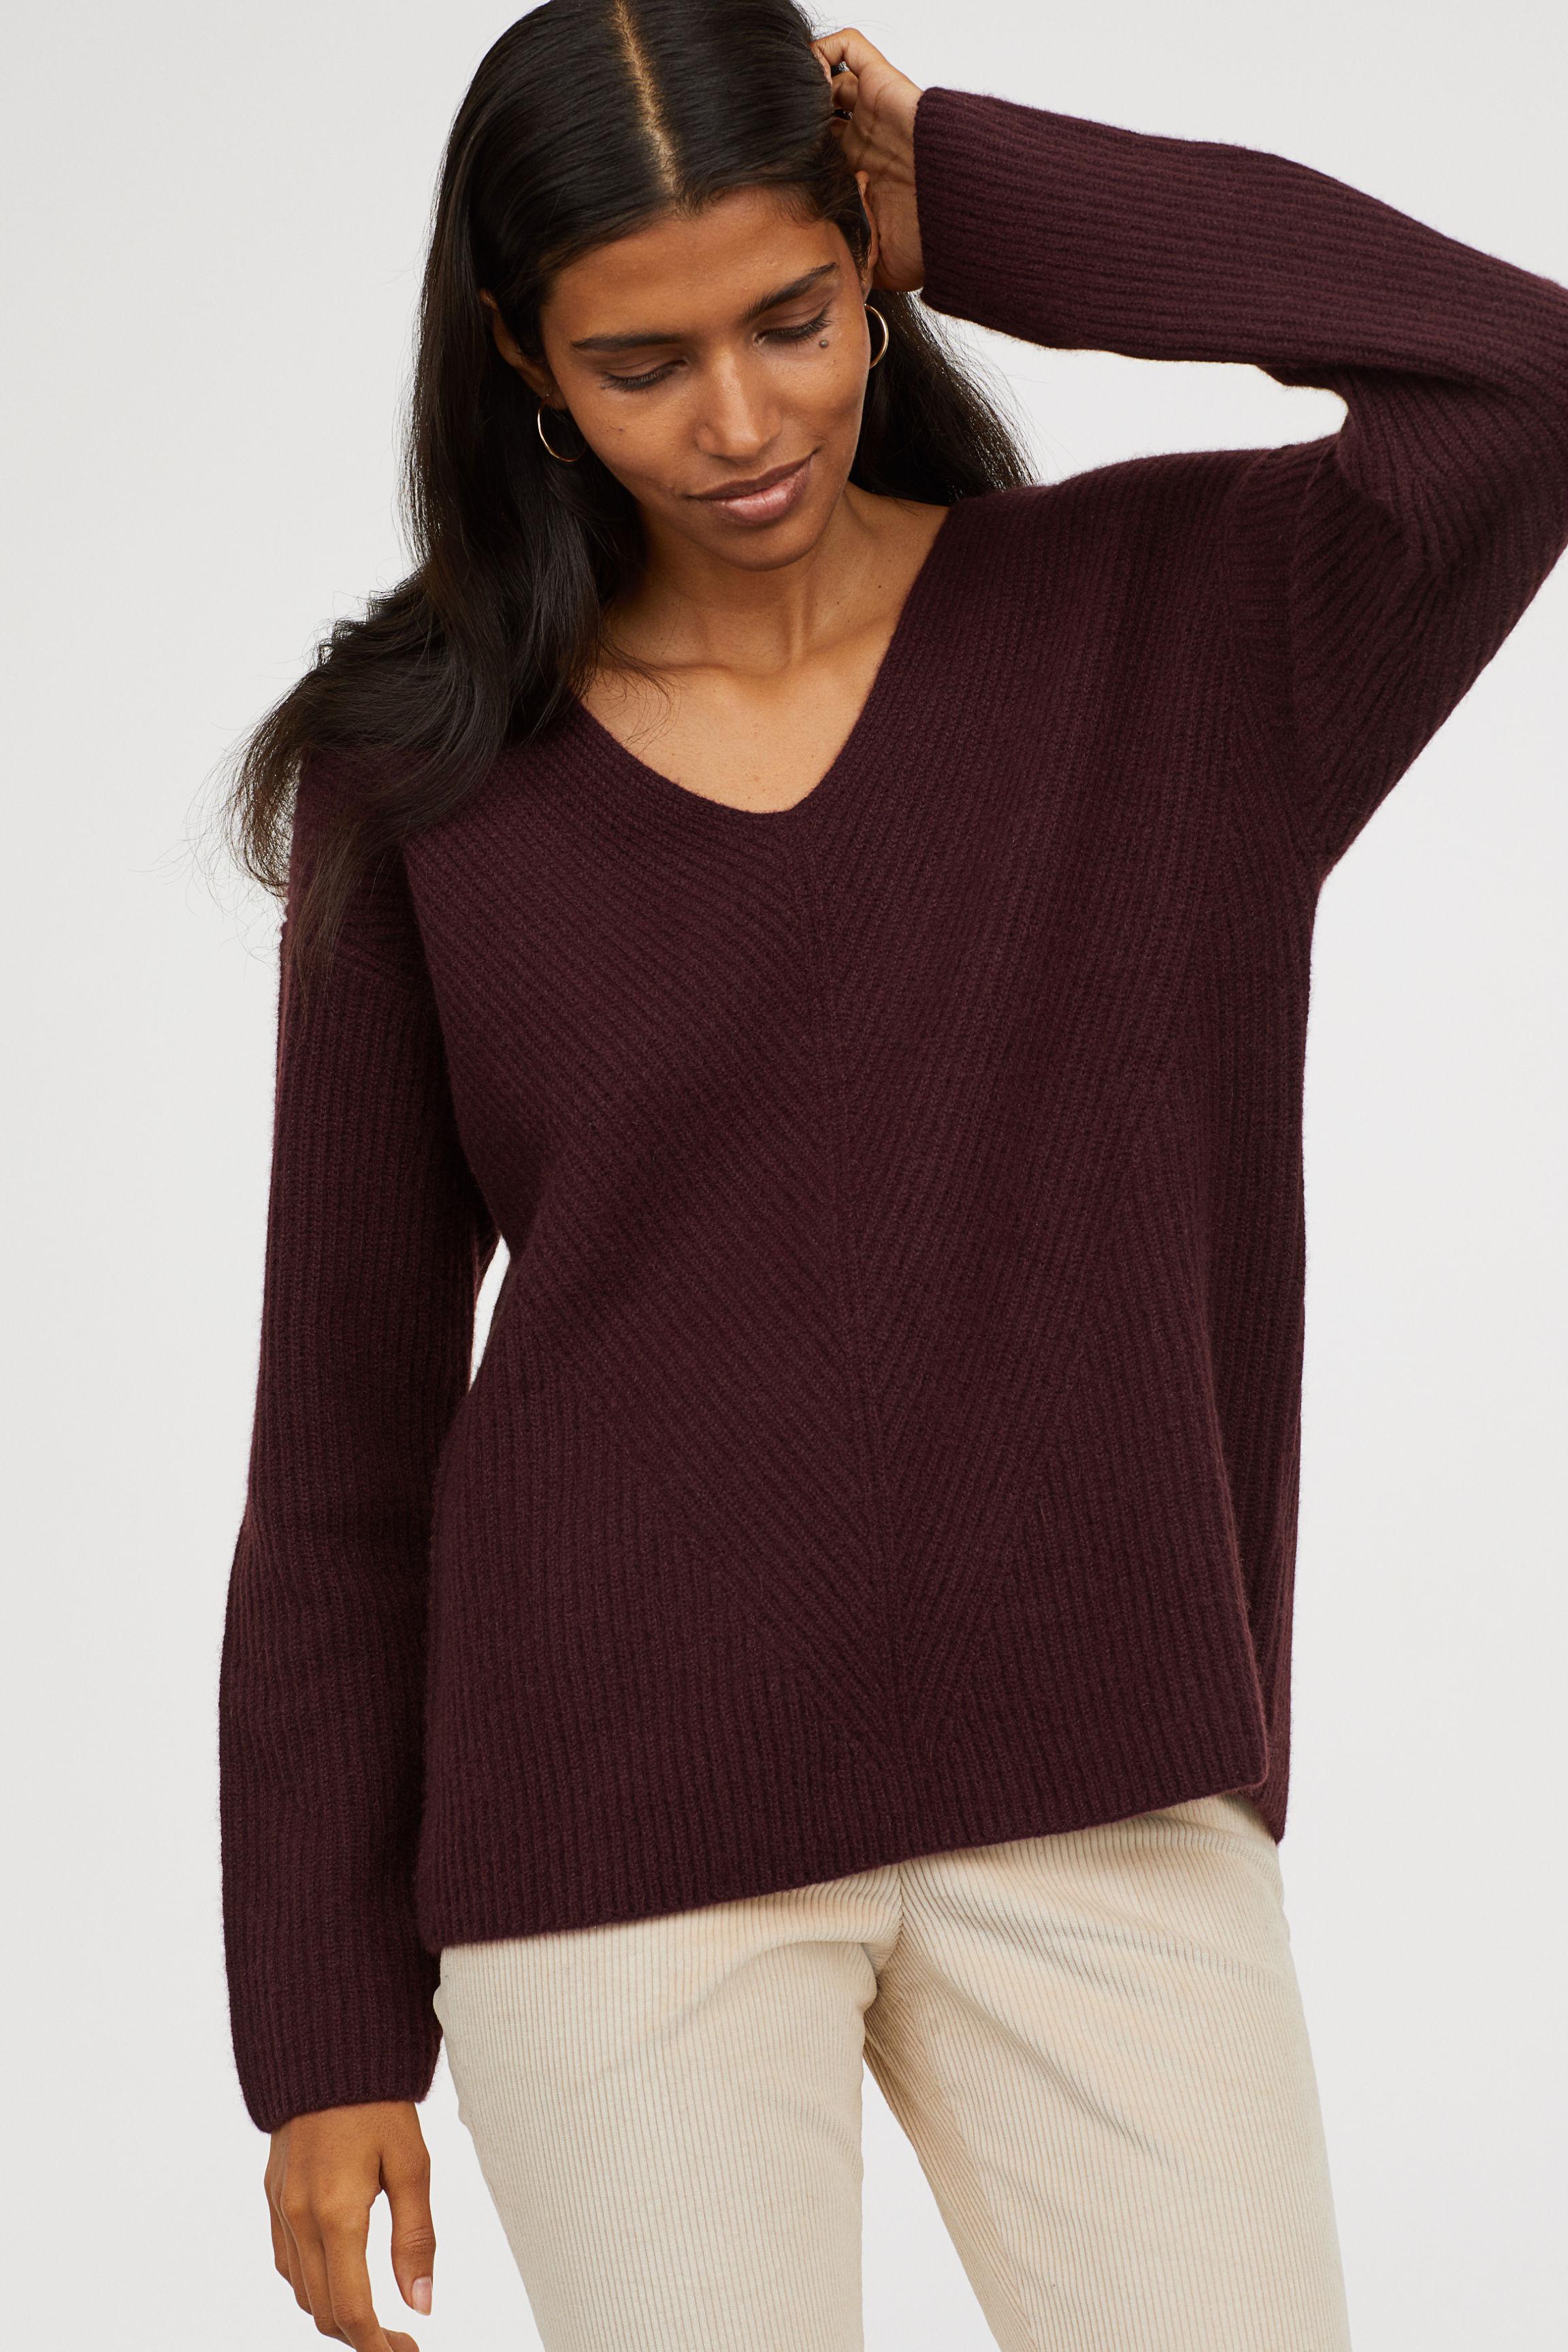 H&M V-neck Cashmere Sweater in Burgundy (Purple) - Lyst